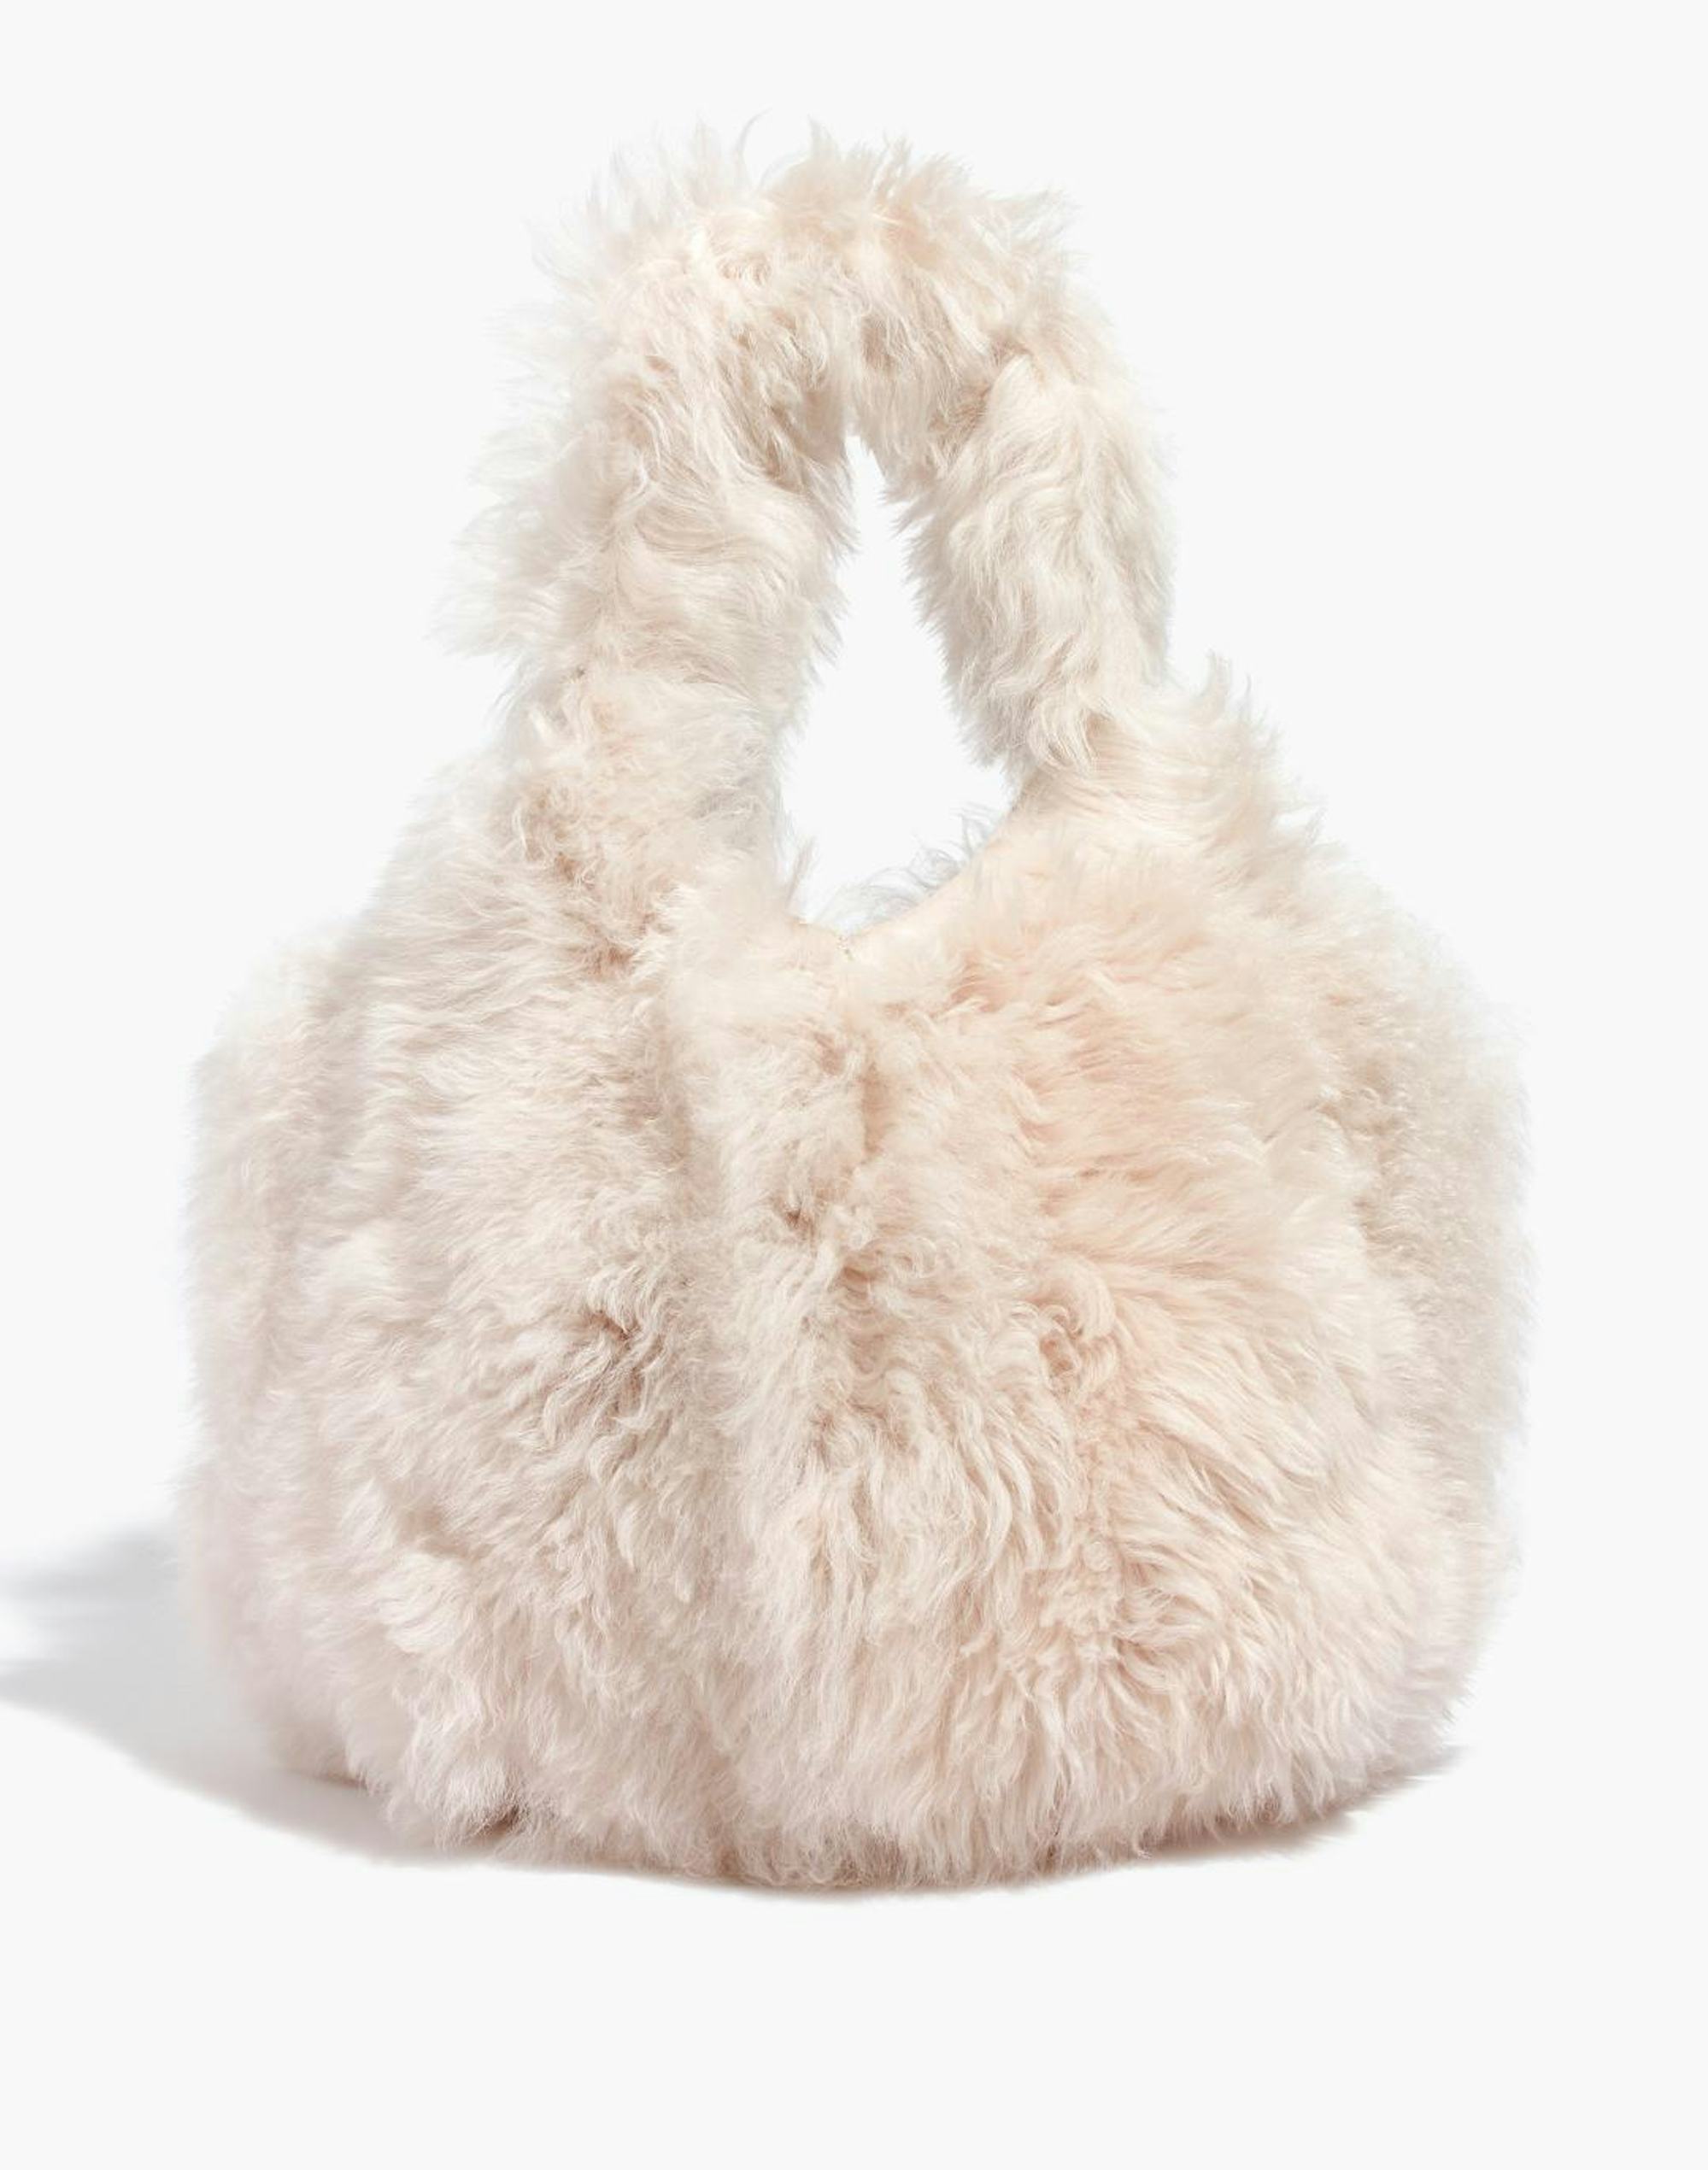 Shop Fuzzy Faux Fur And Shearling Handbags For Fall 2020